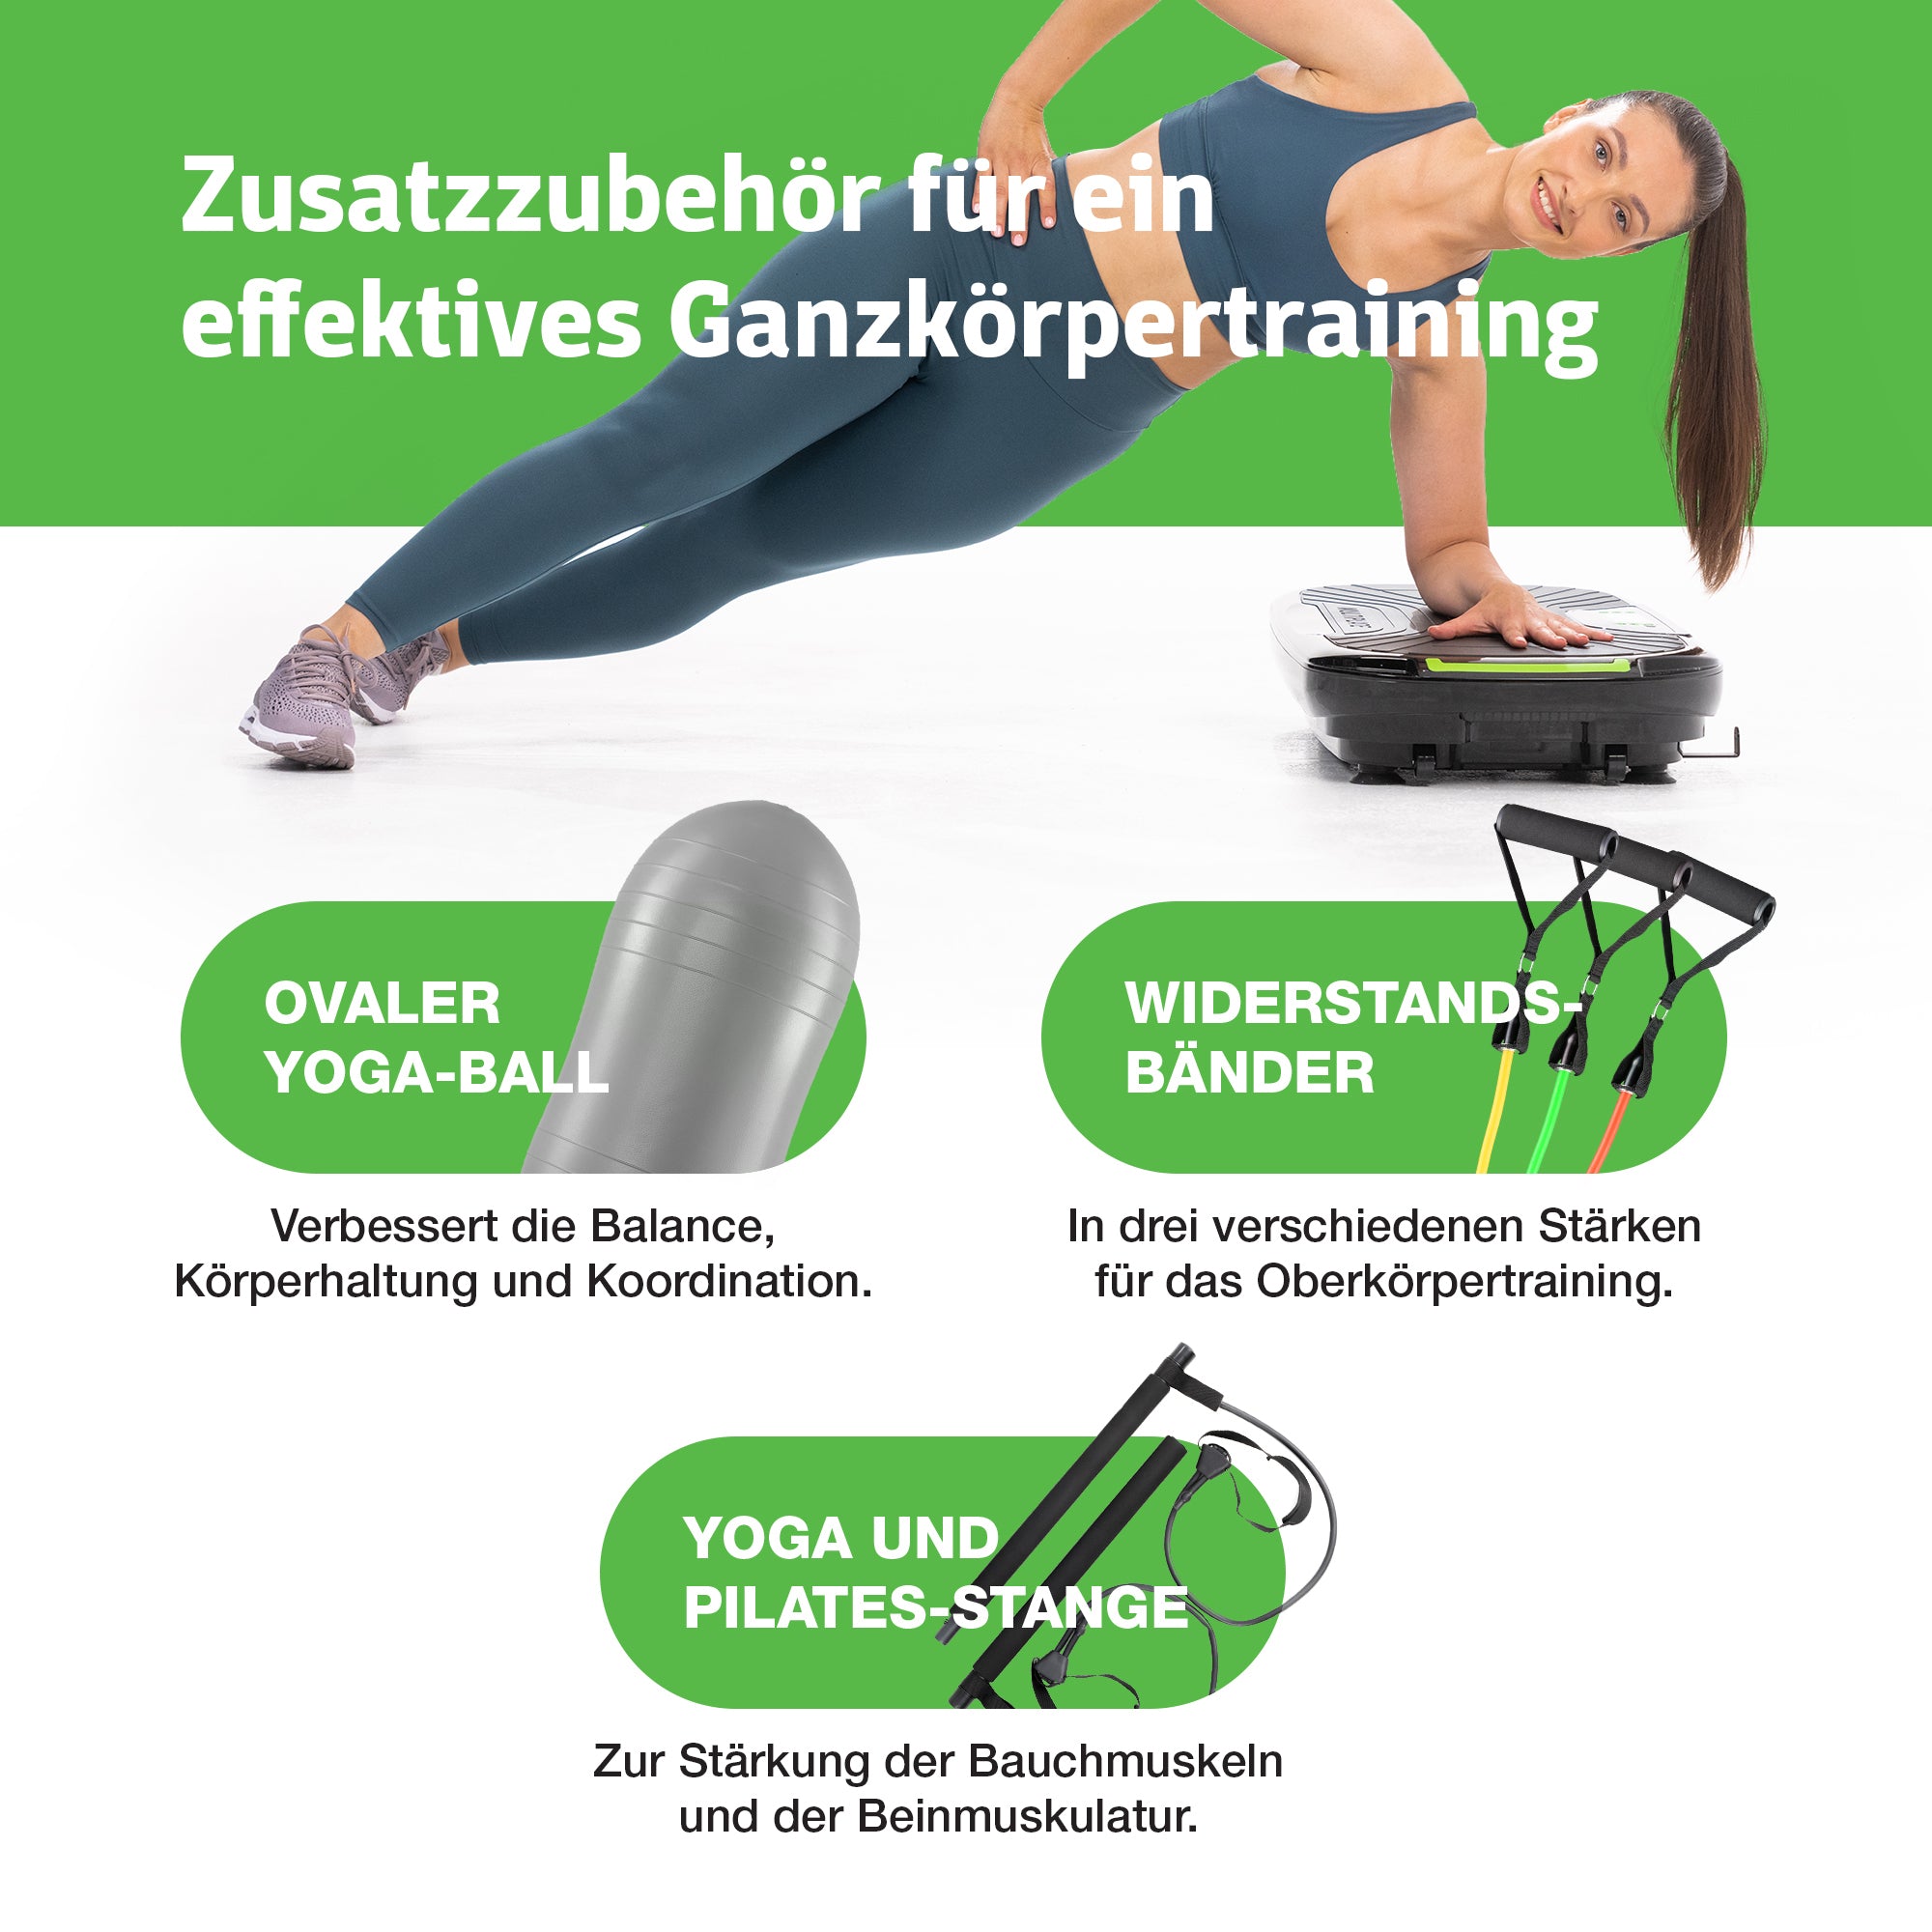 Donnerberg vibration platform includes additional accessories: yoga ball, sling trainer, resistance bands, pilates bar